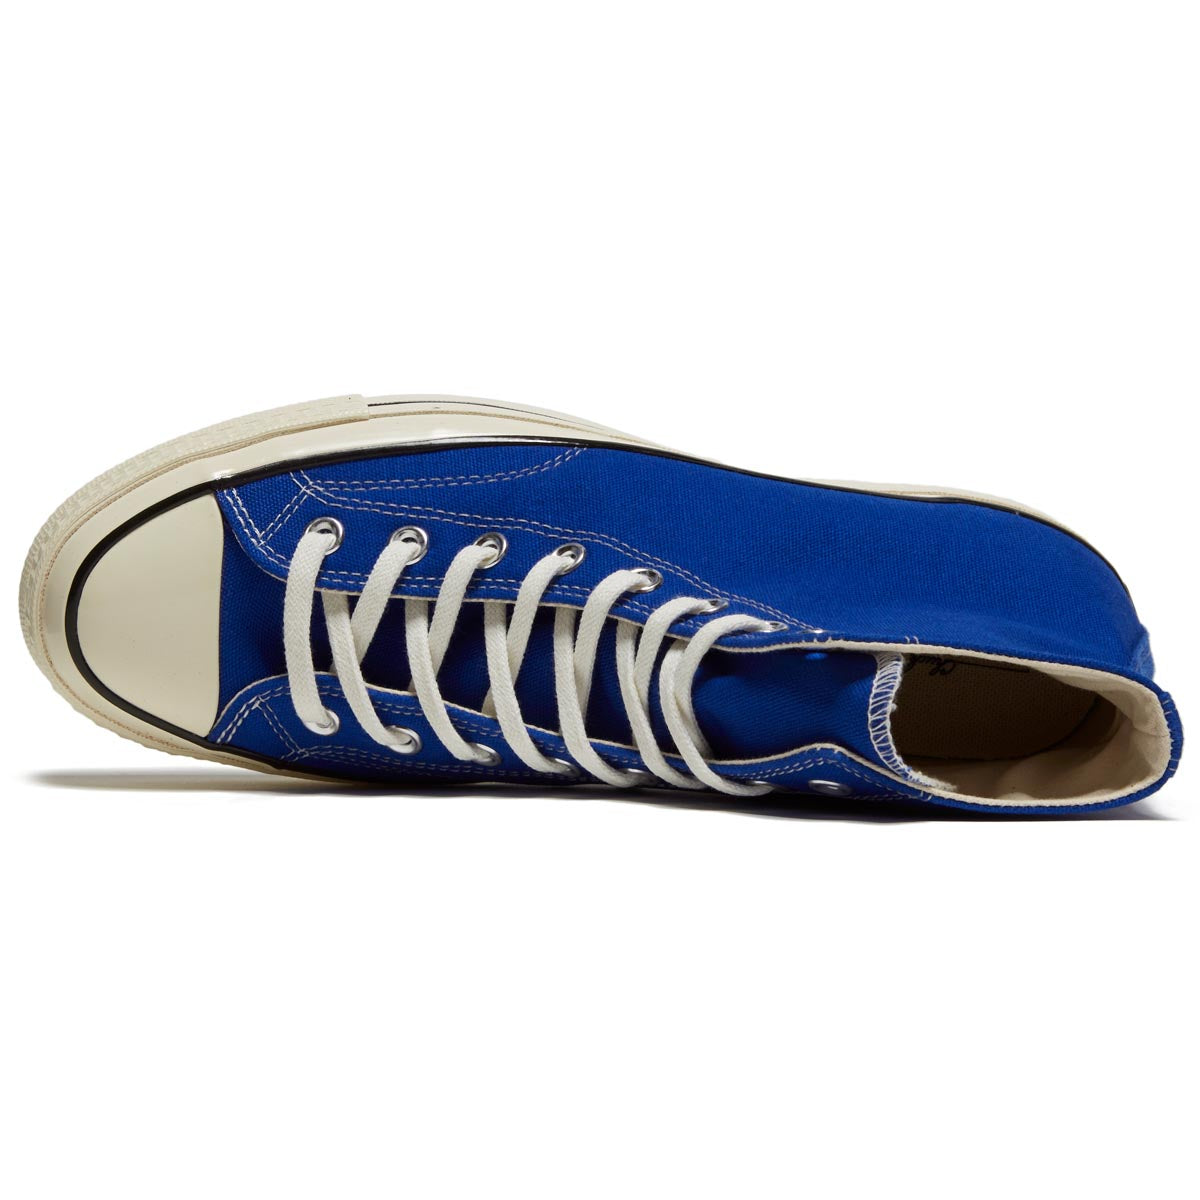 Converse Chuck 70 Hi Shoes - Nice Blue/Black/Egret image 3